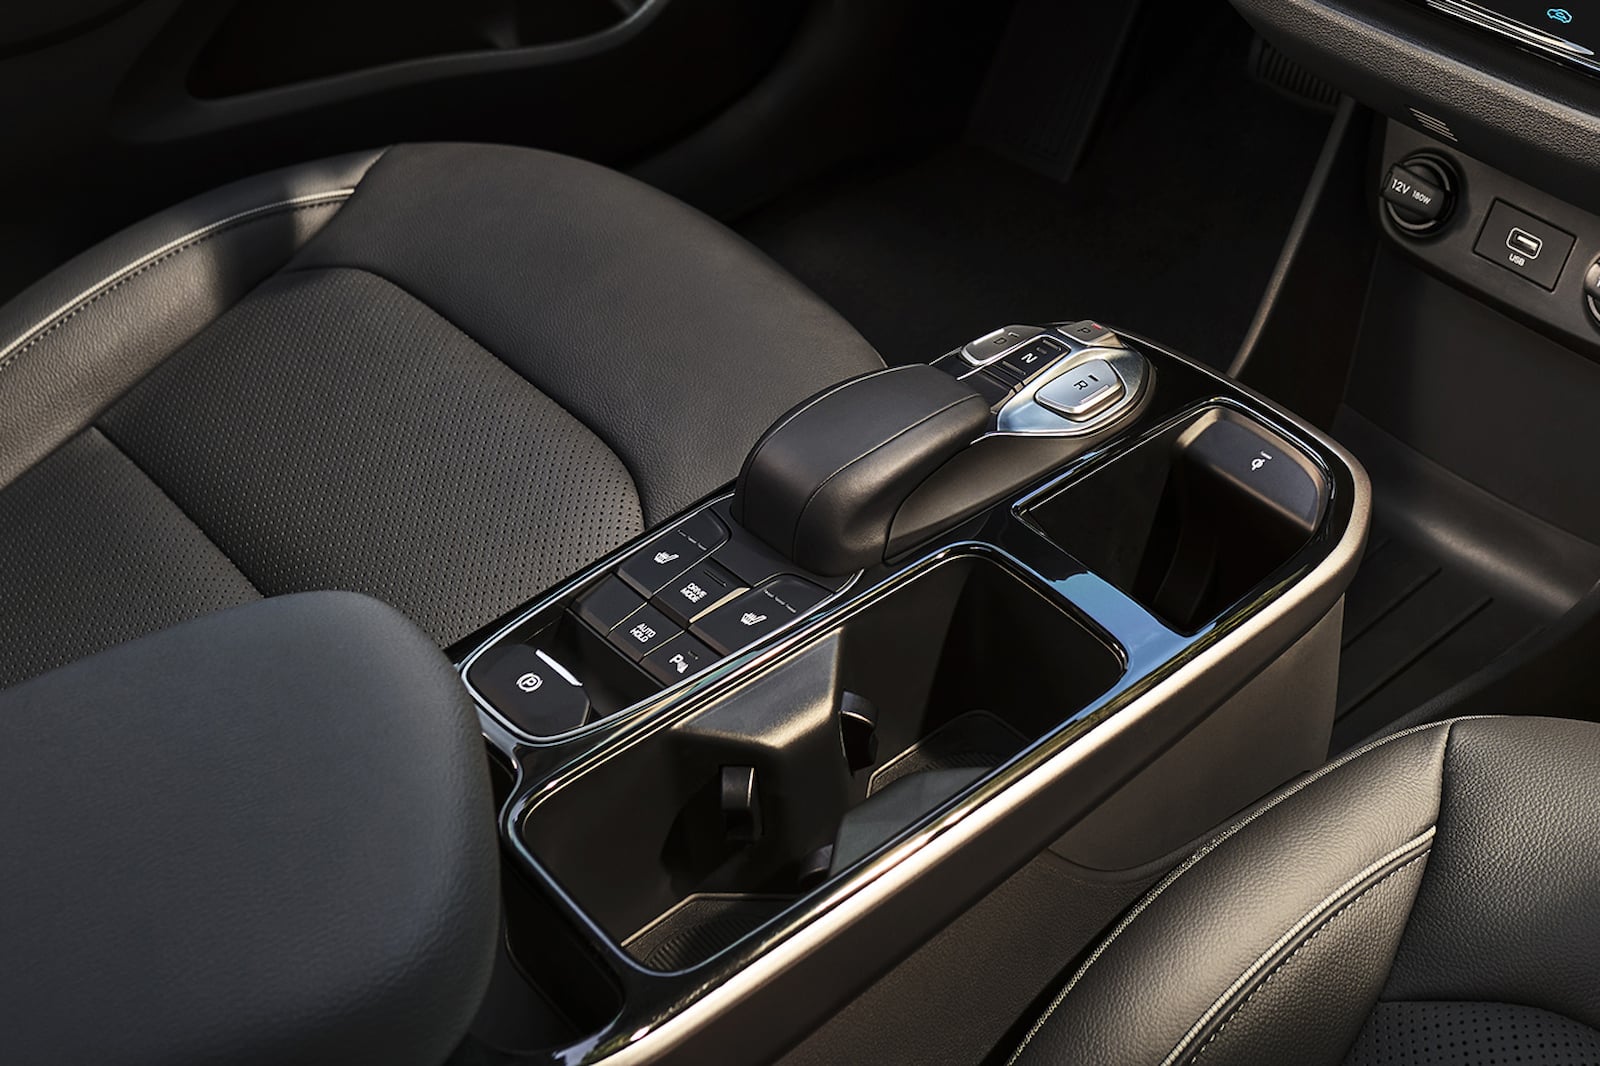 2021 Hyundai Ioniq Electric Interior Dimensions: Seating, Cargo